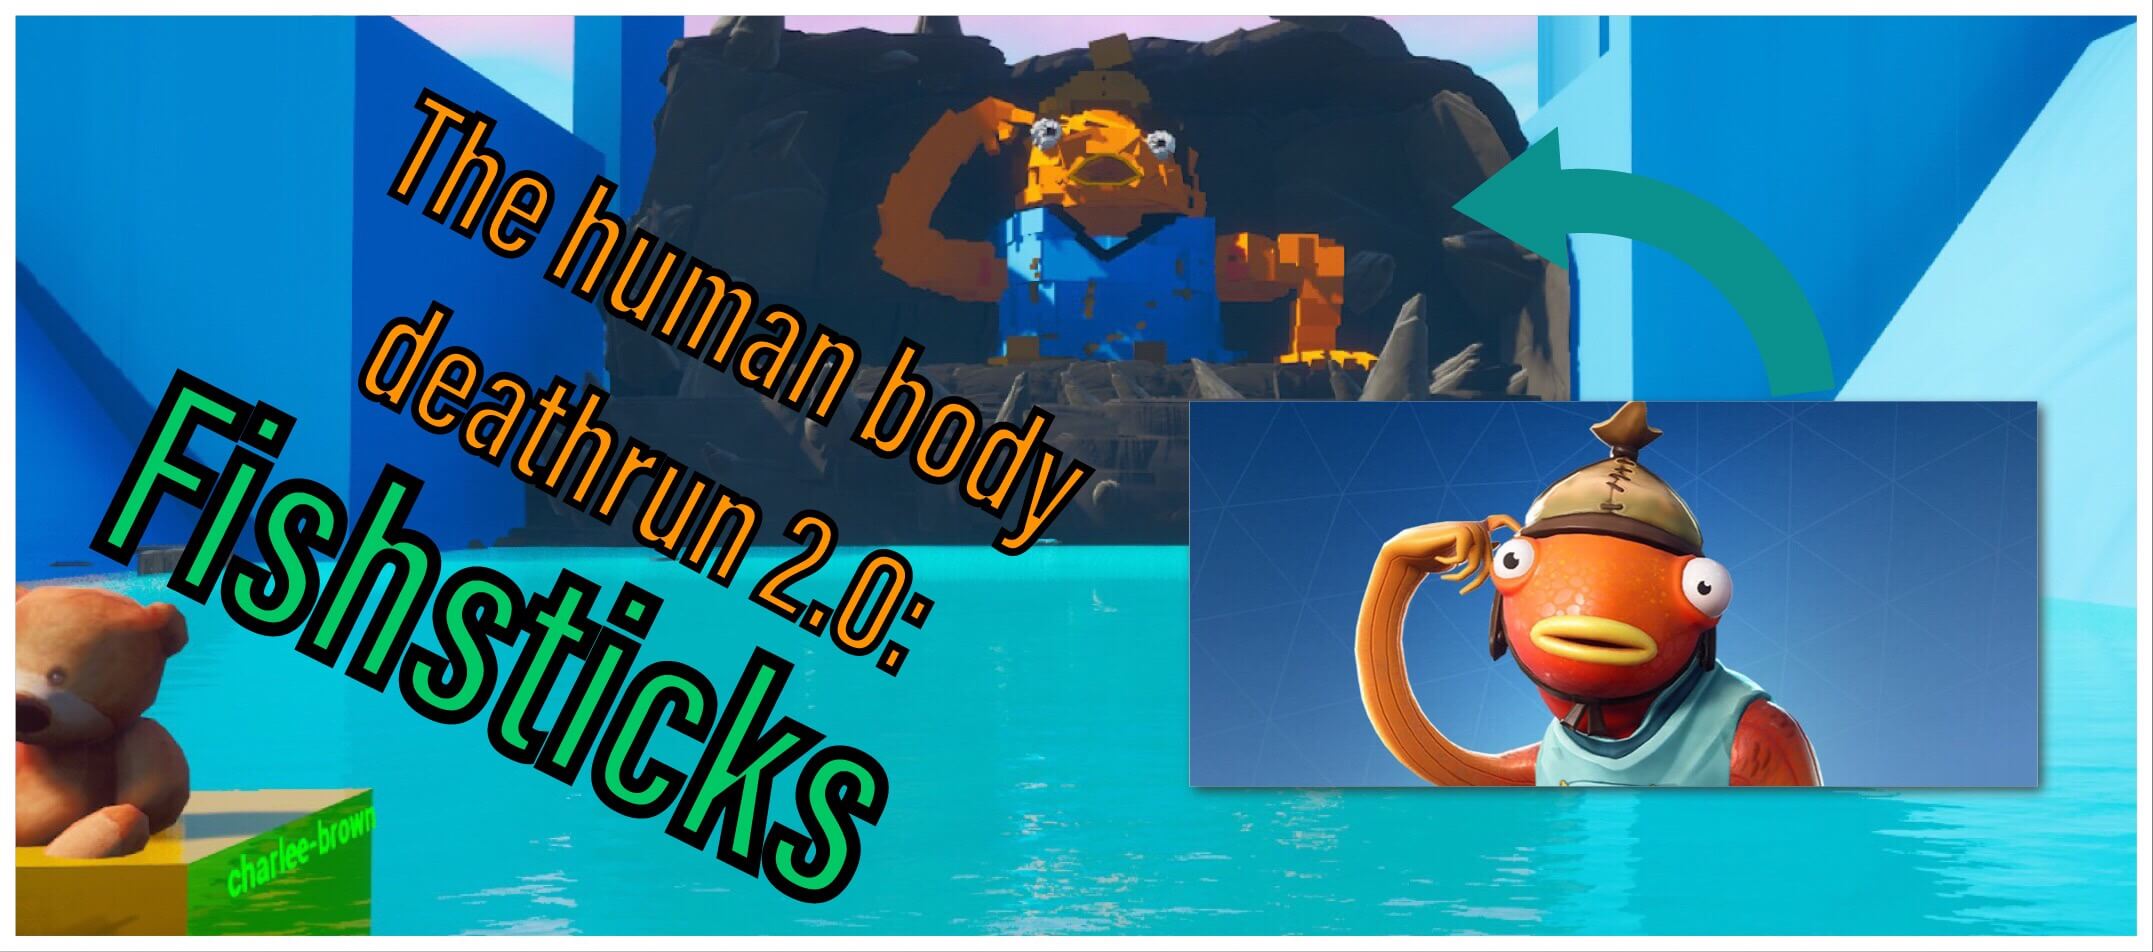 HUMAN BODY DEATHRUN 2.0 (FISHSTICKS)